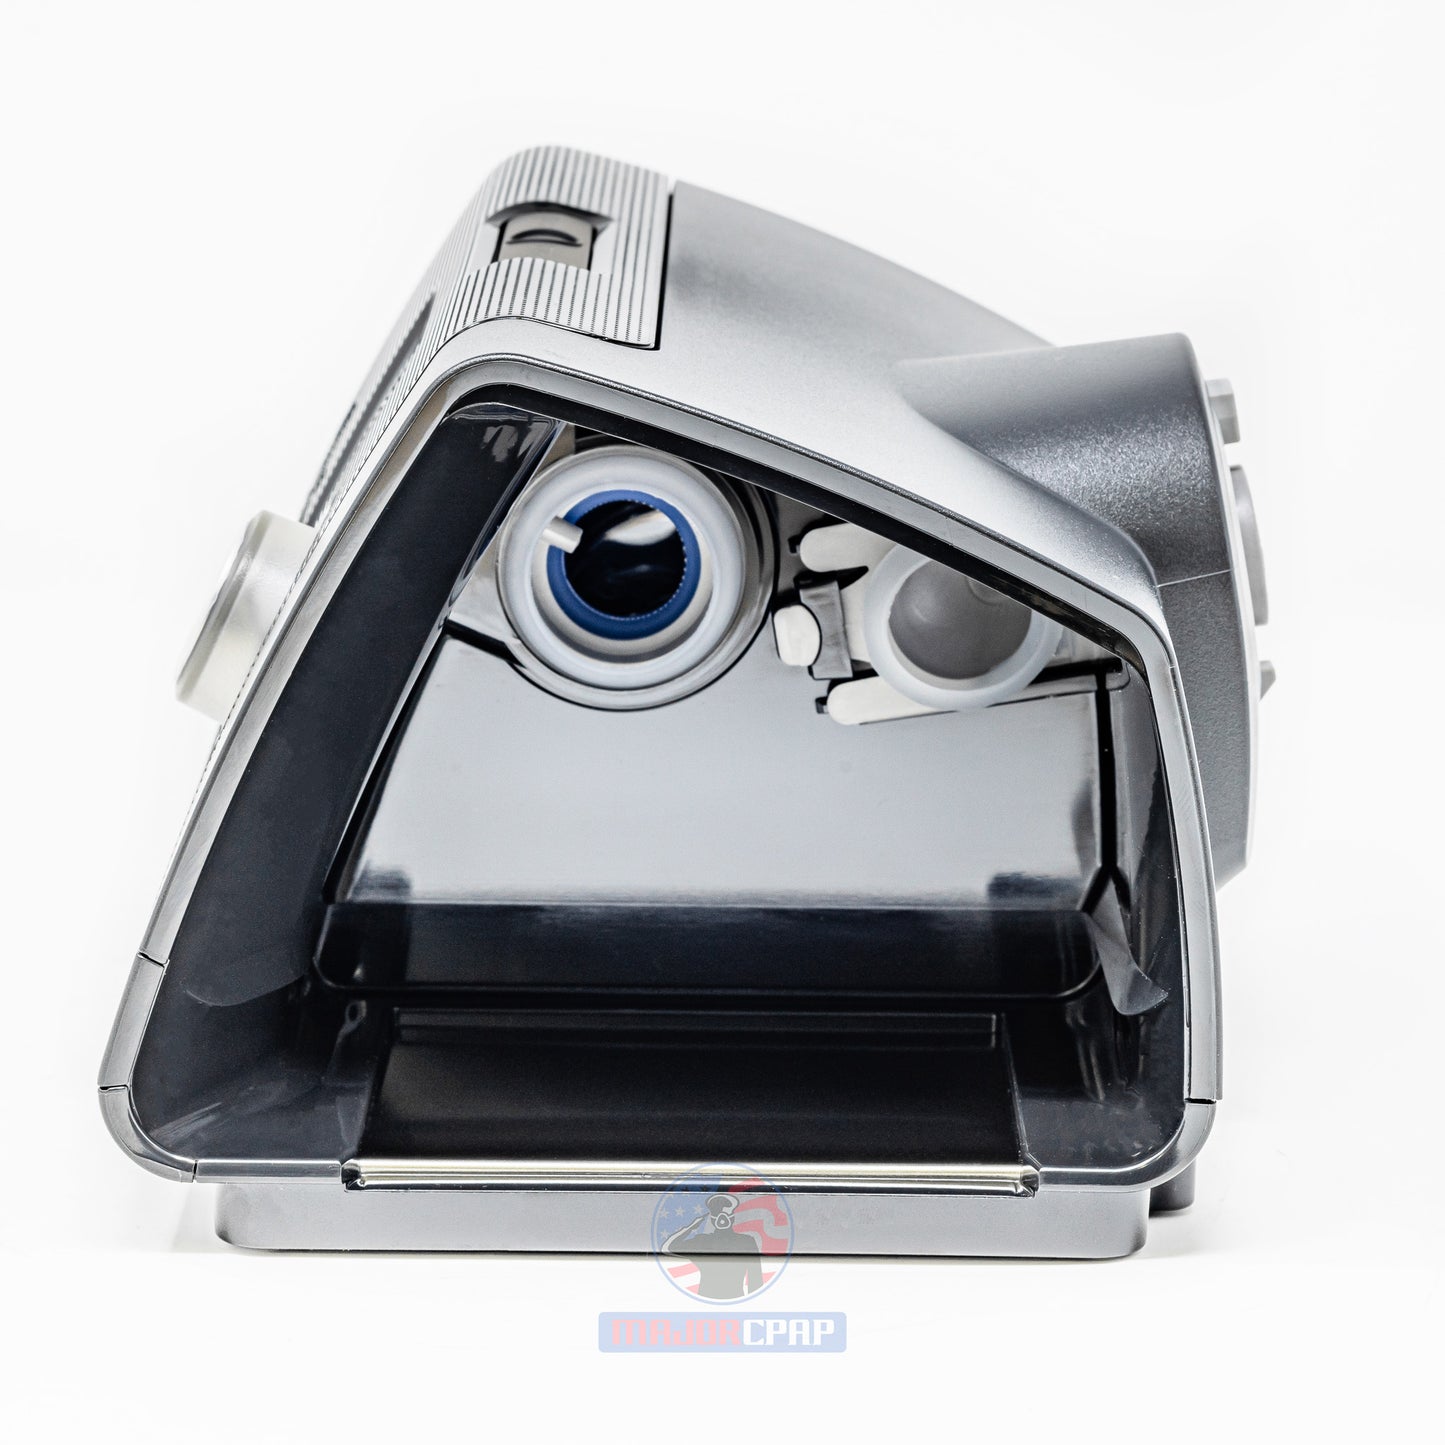 ResMed AirSense 10 Auto CPAP Machine - Brand New